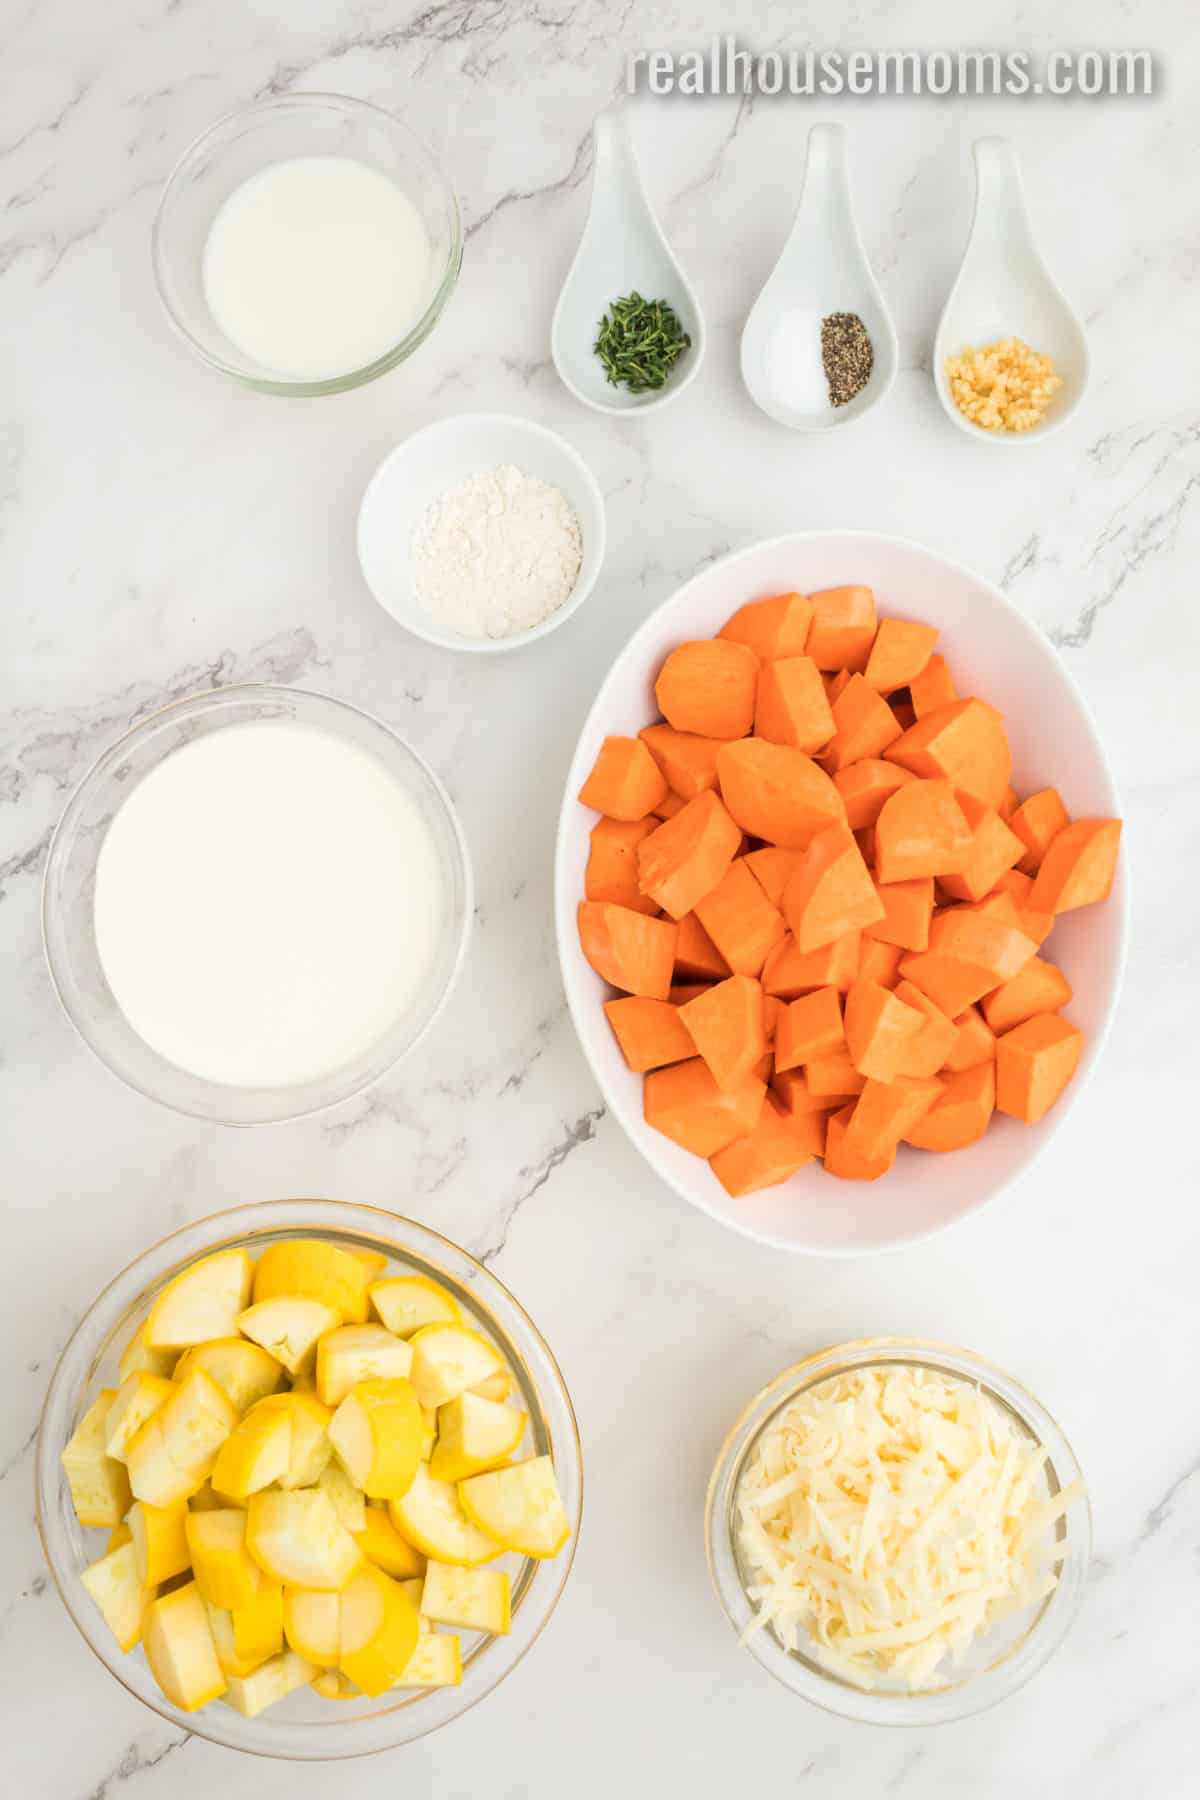 Squash & Sweet Potato Gratin ⋆ Real Housemoms